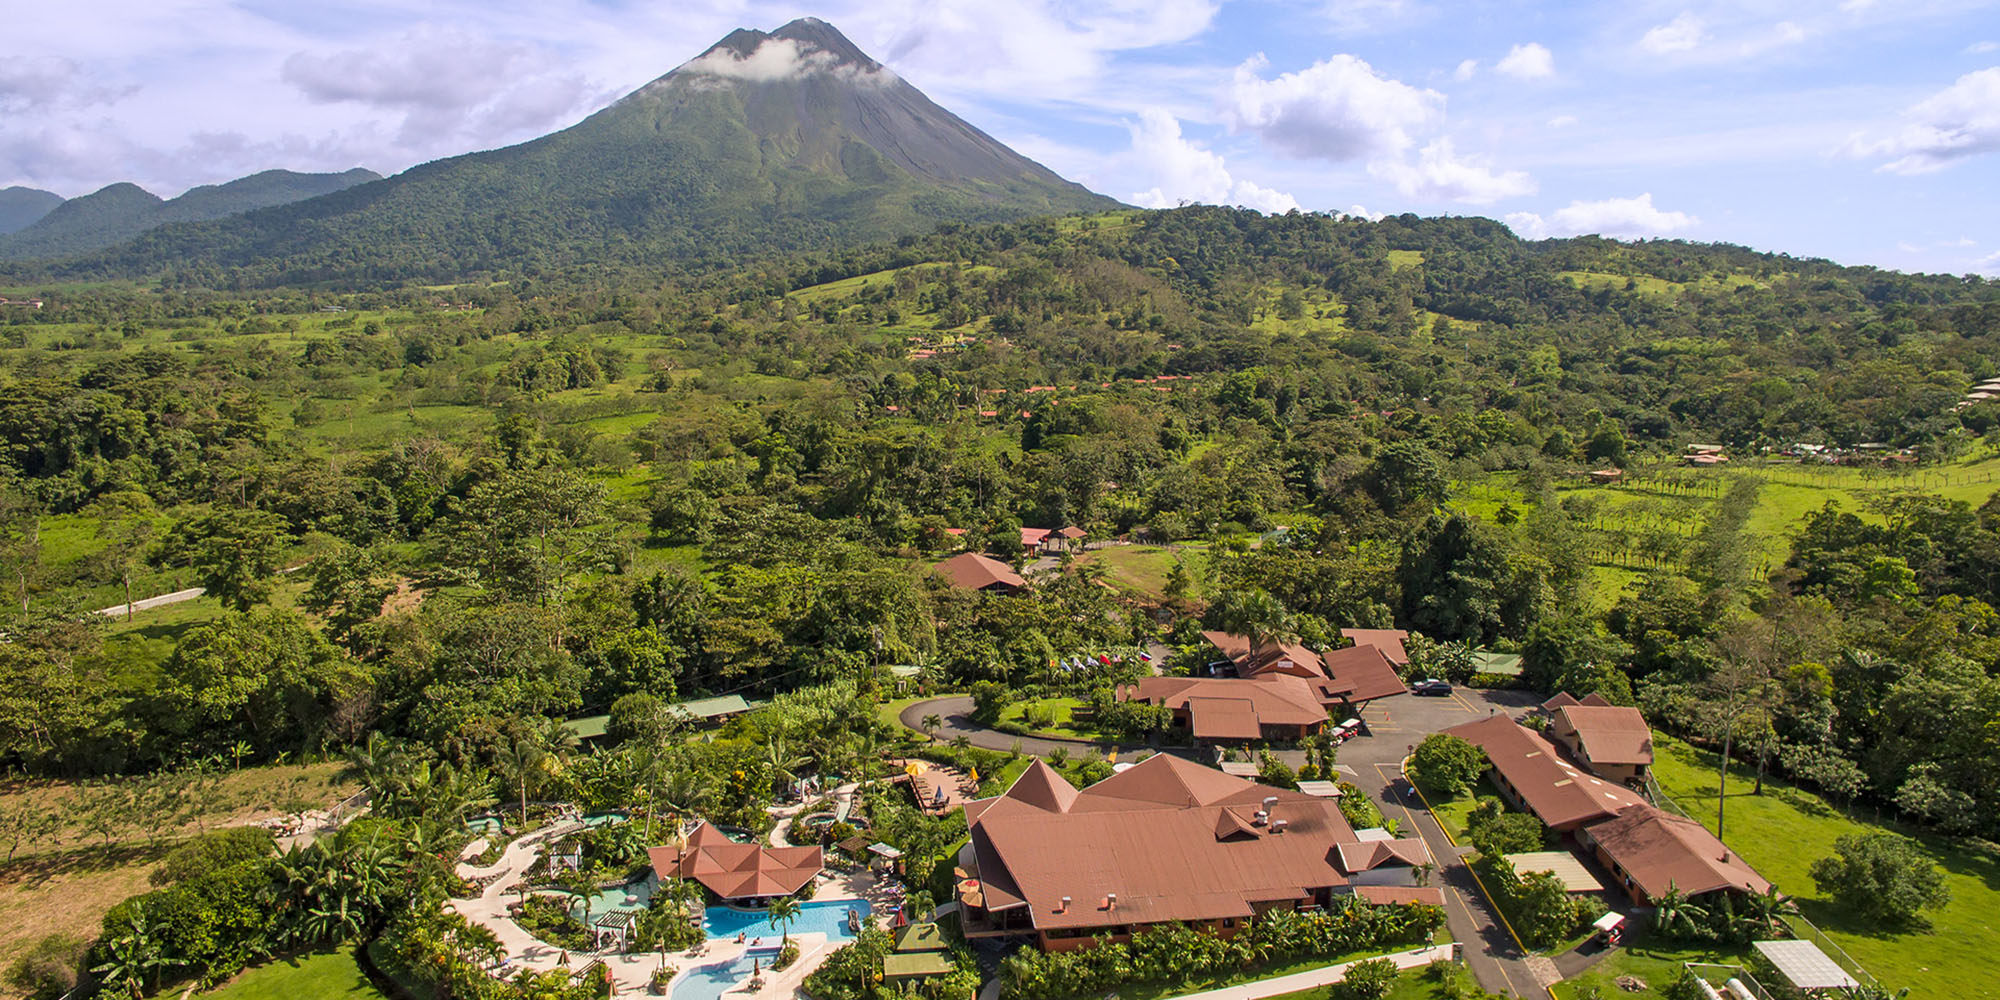 Arenal Springs resort: Volcano